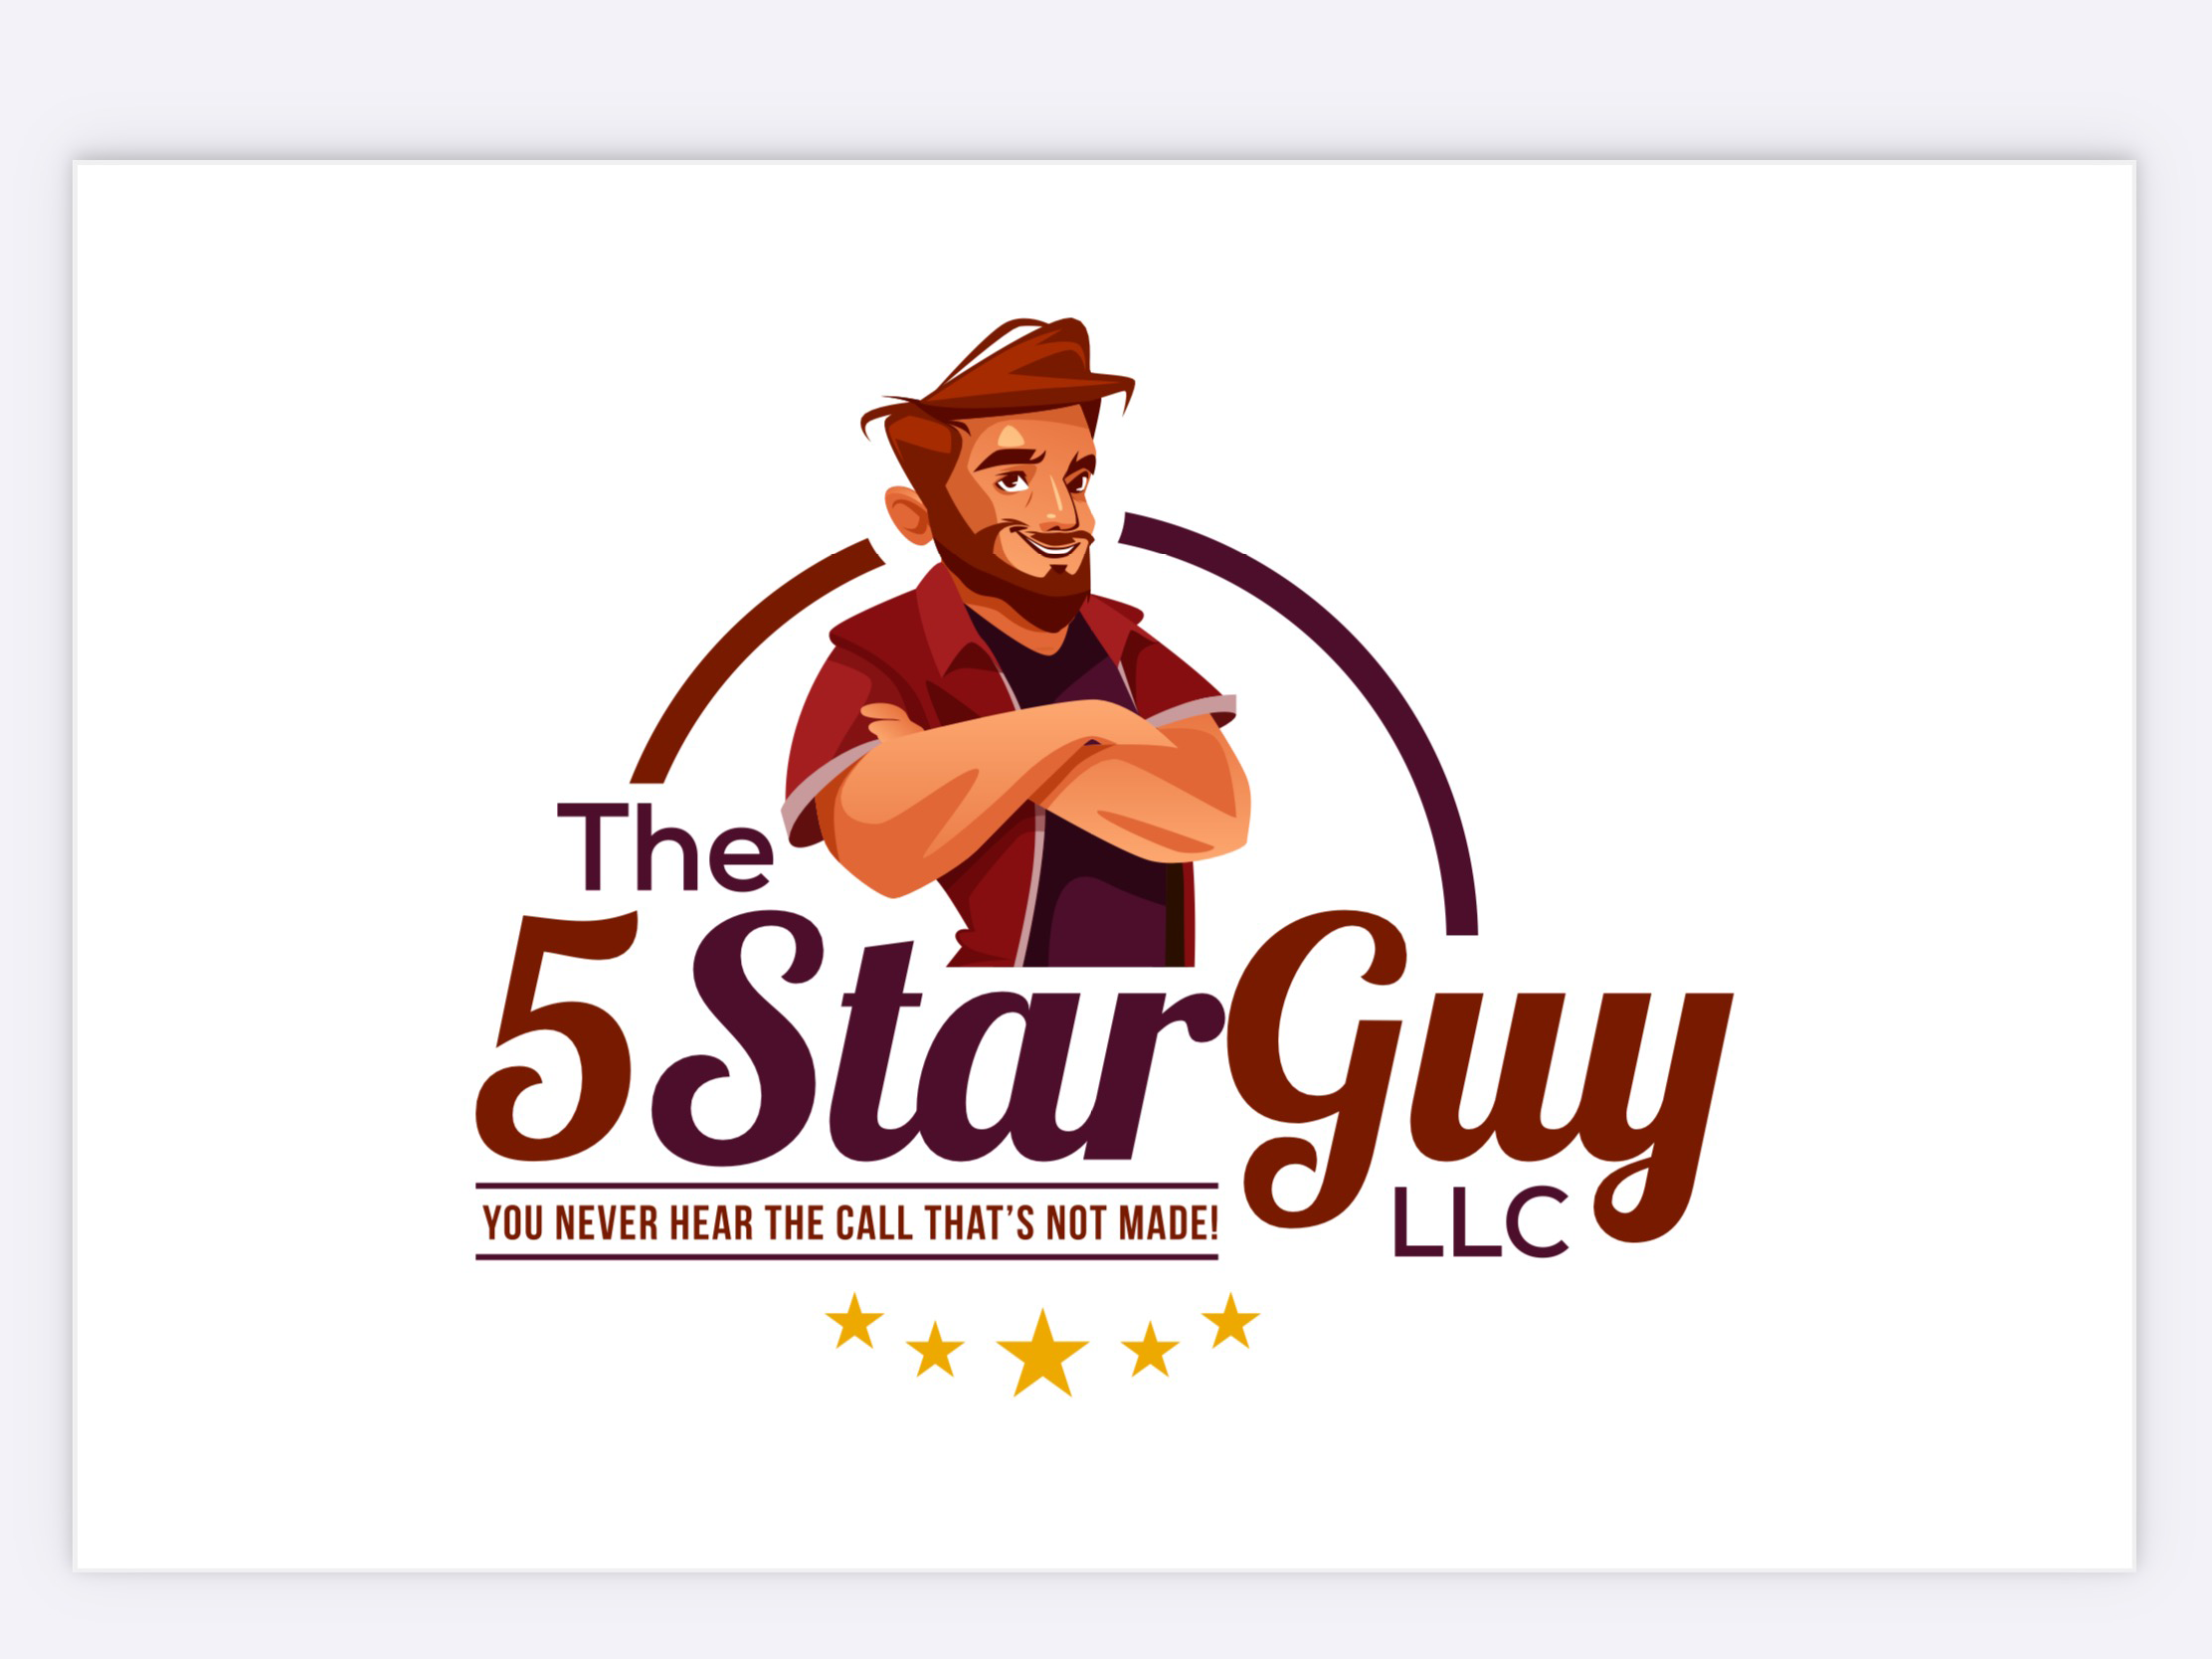 The 5 Star Guy LLC logo